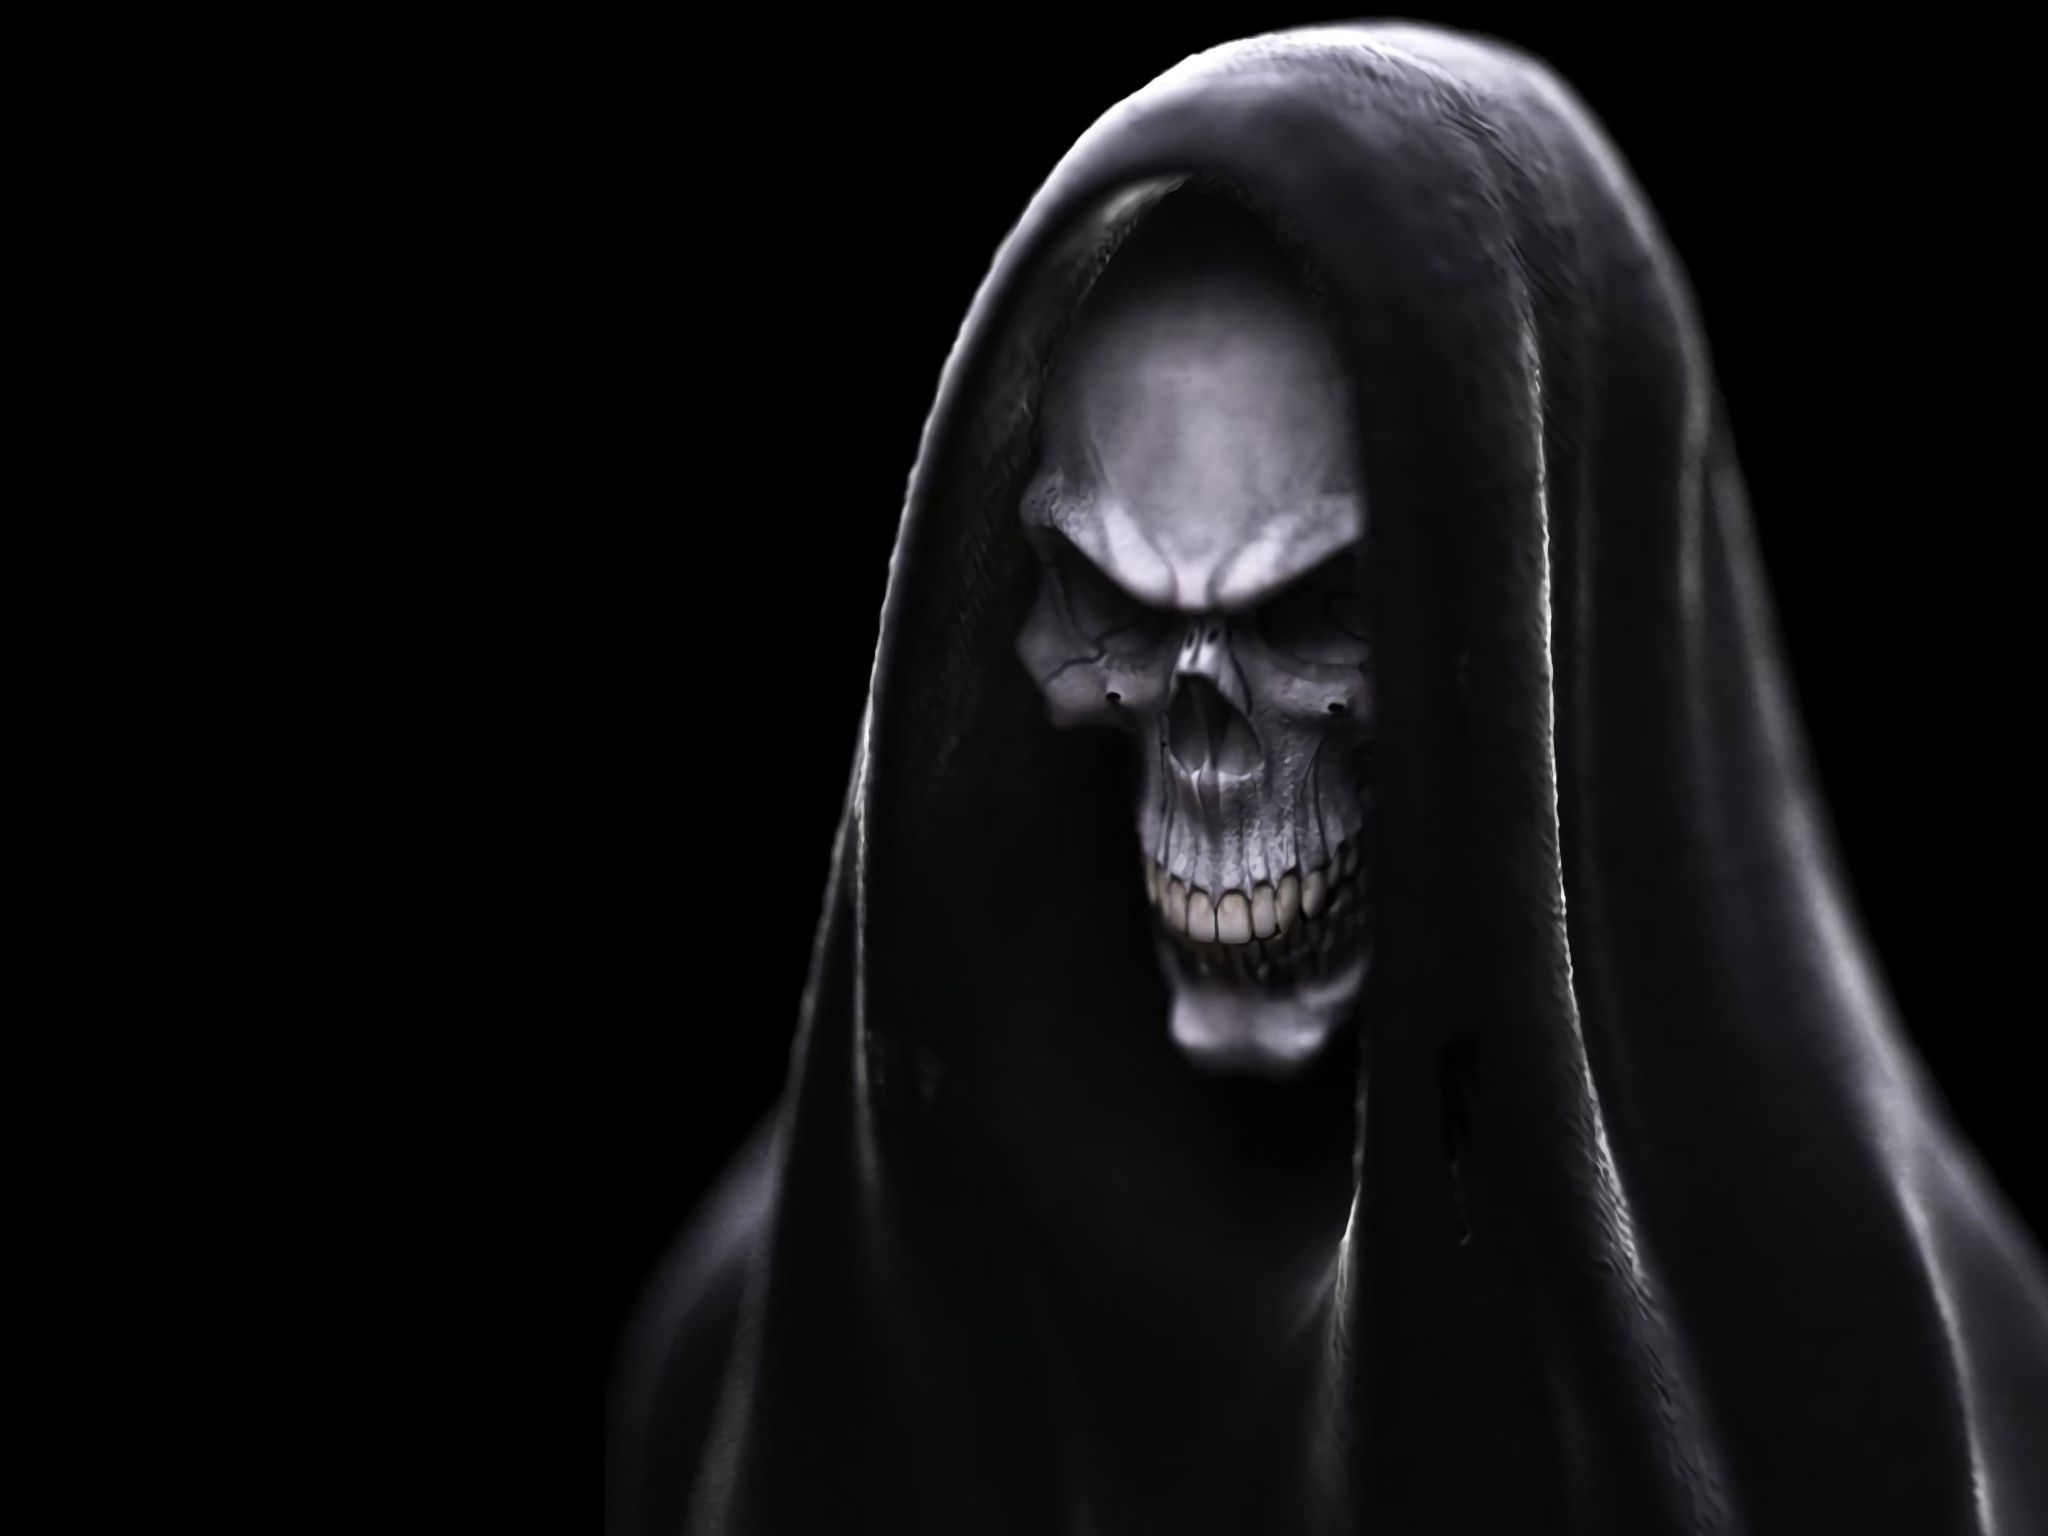  Grim Reaper HQ Background Images